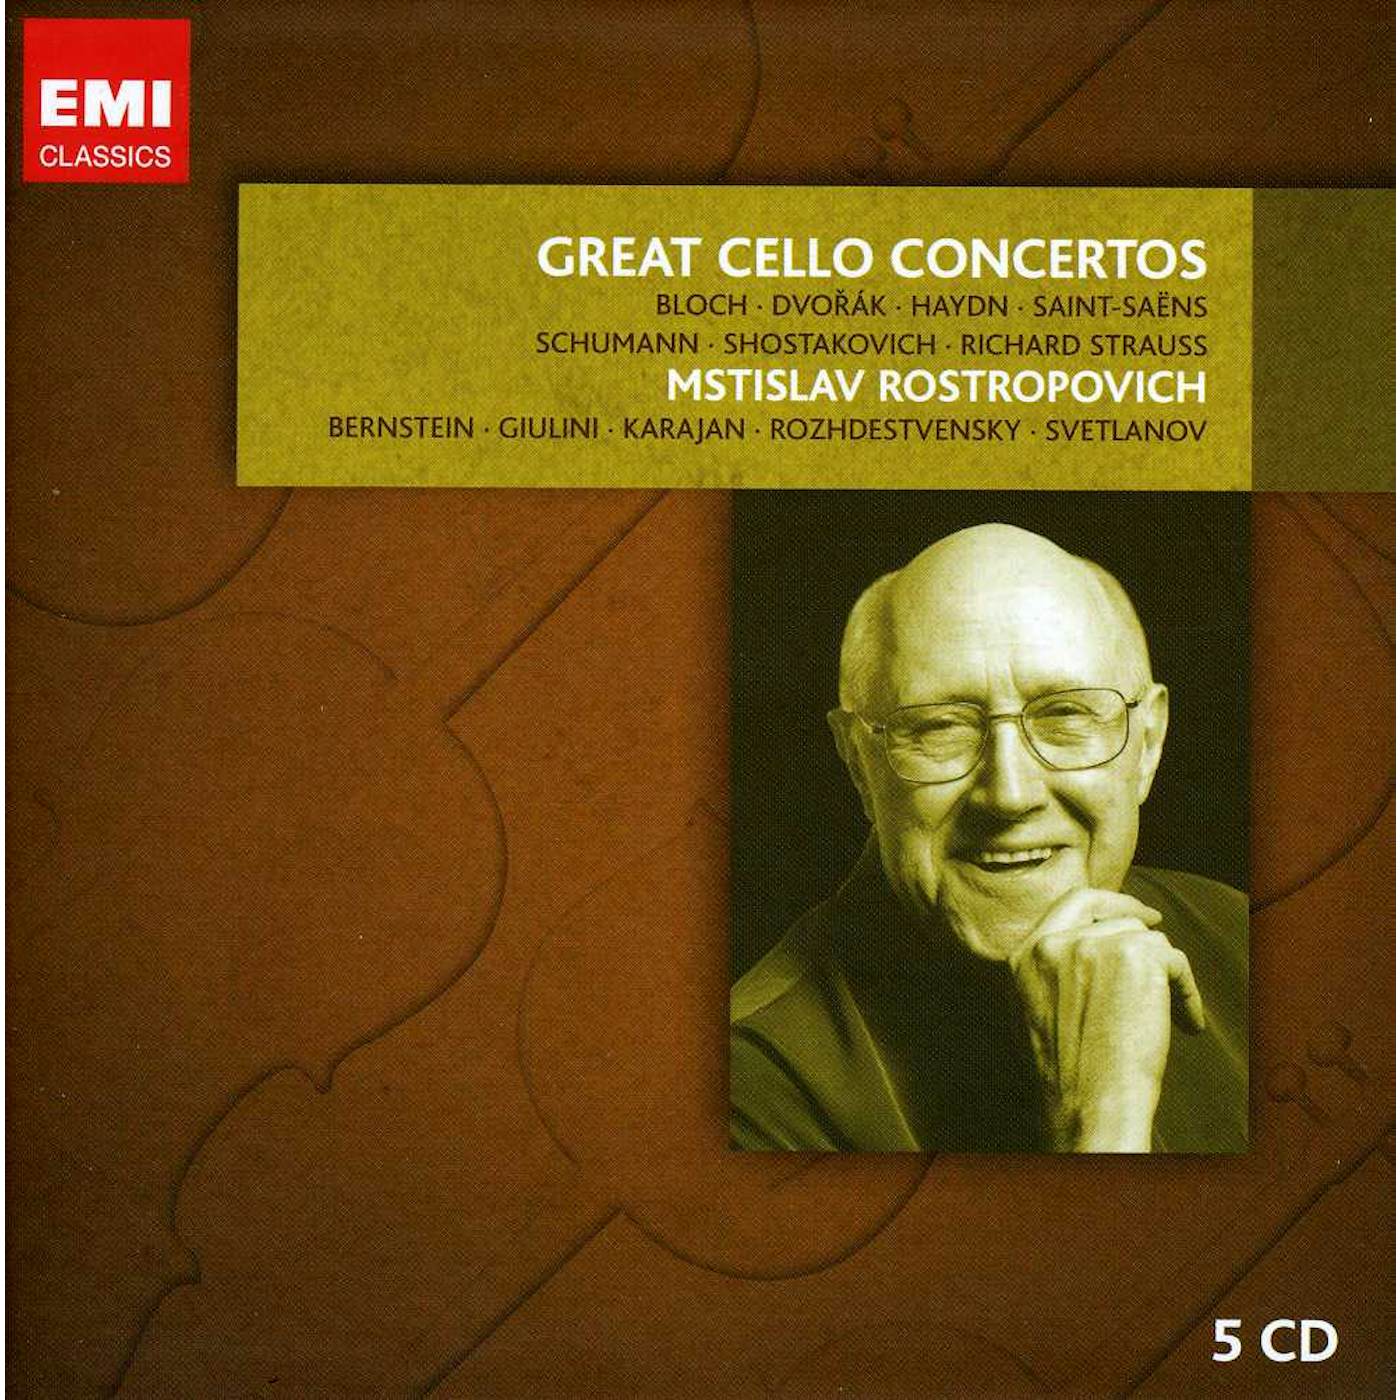 Mstislav Rostropovich GREAT CELLO CONCERTOS CD